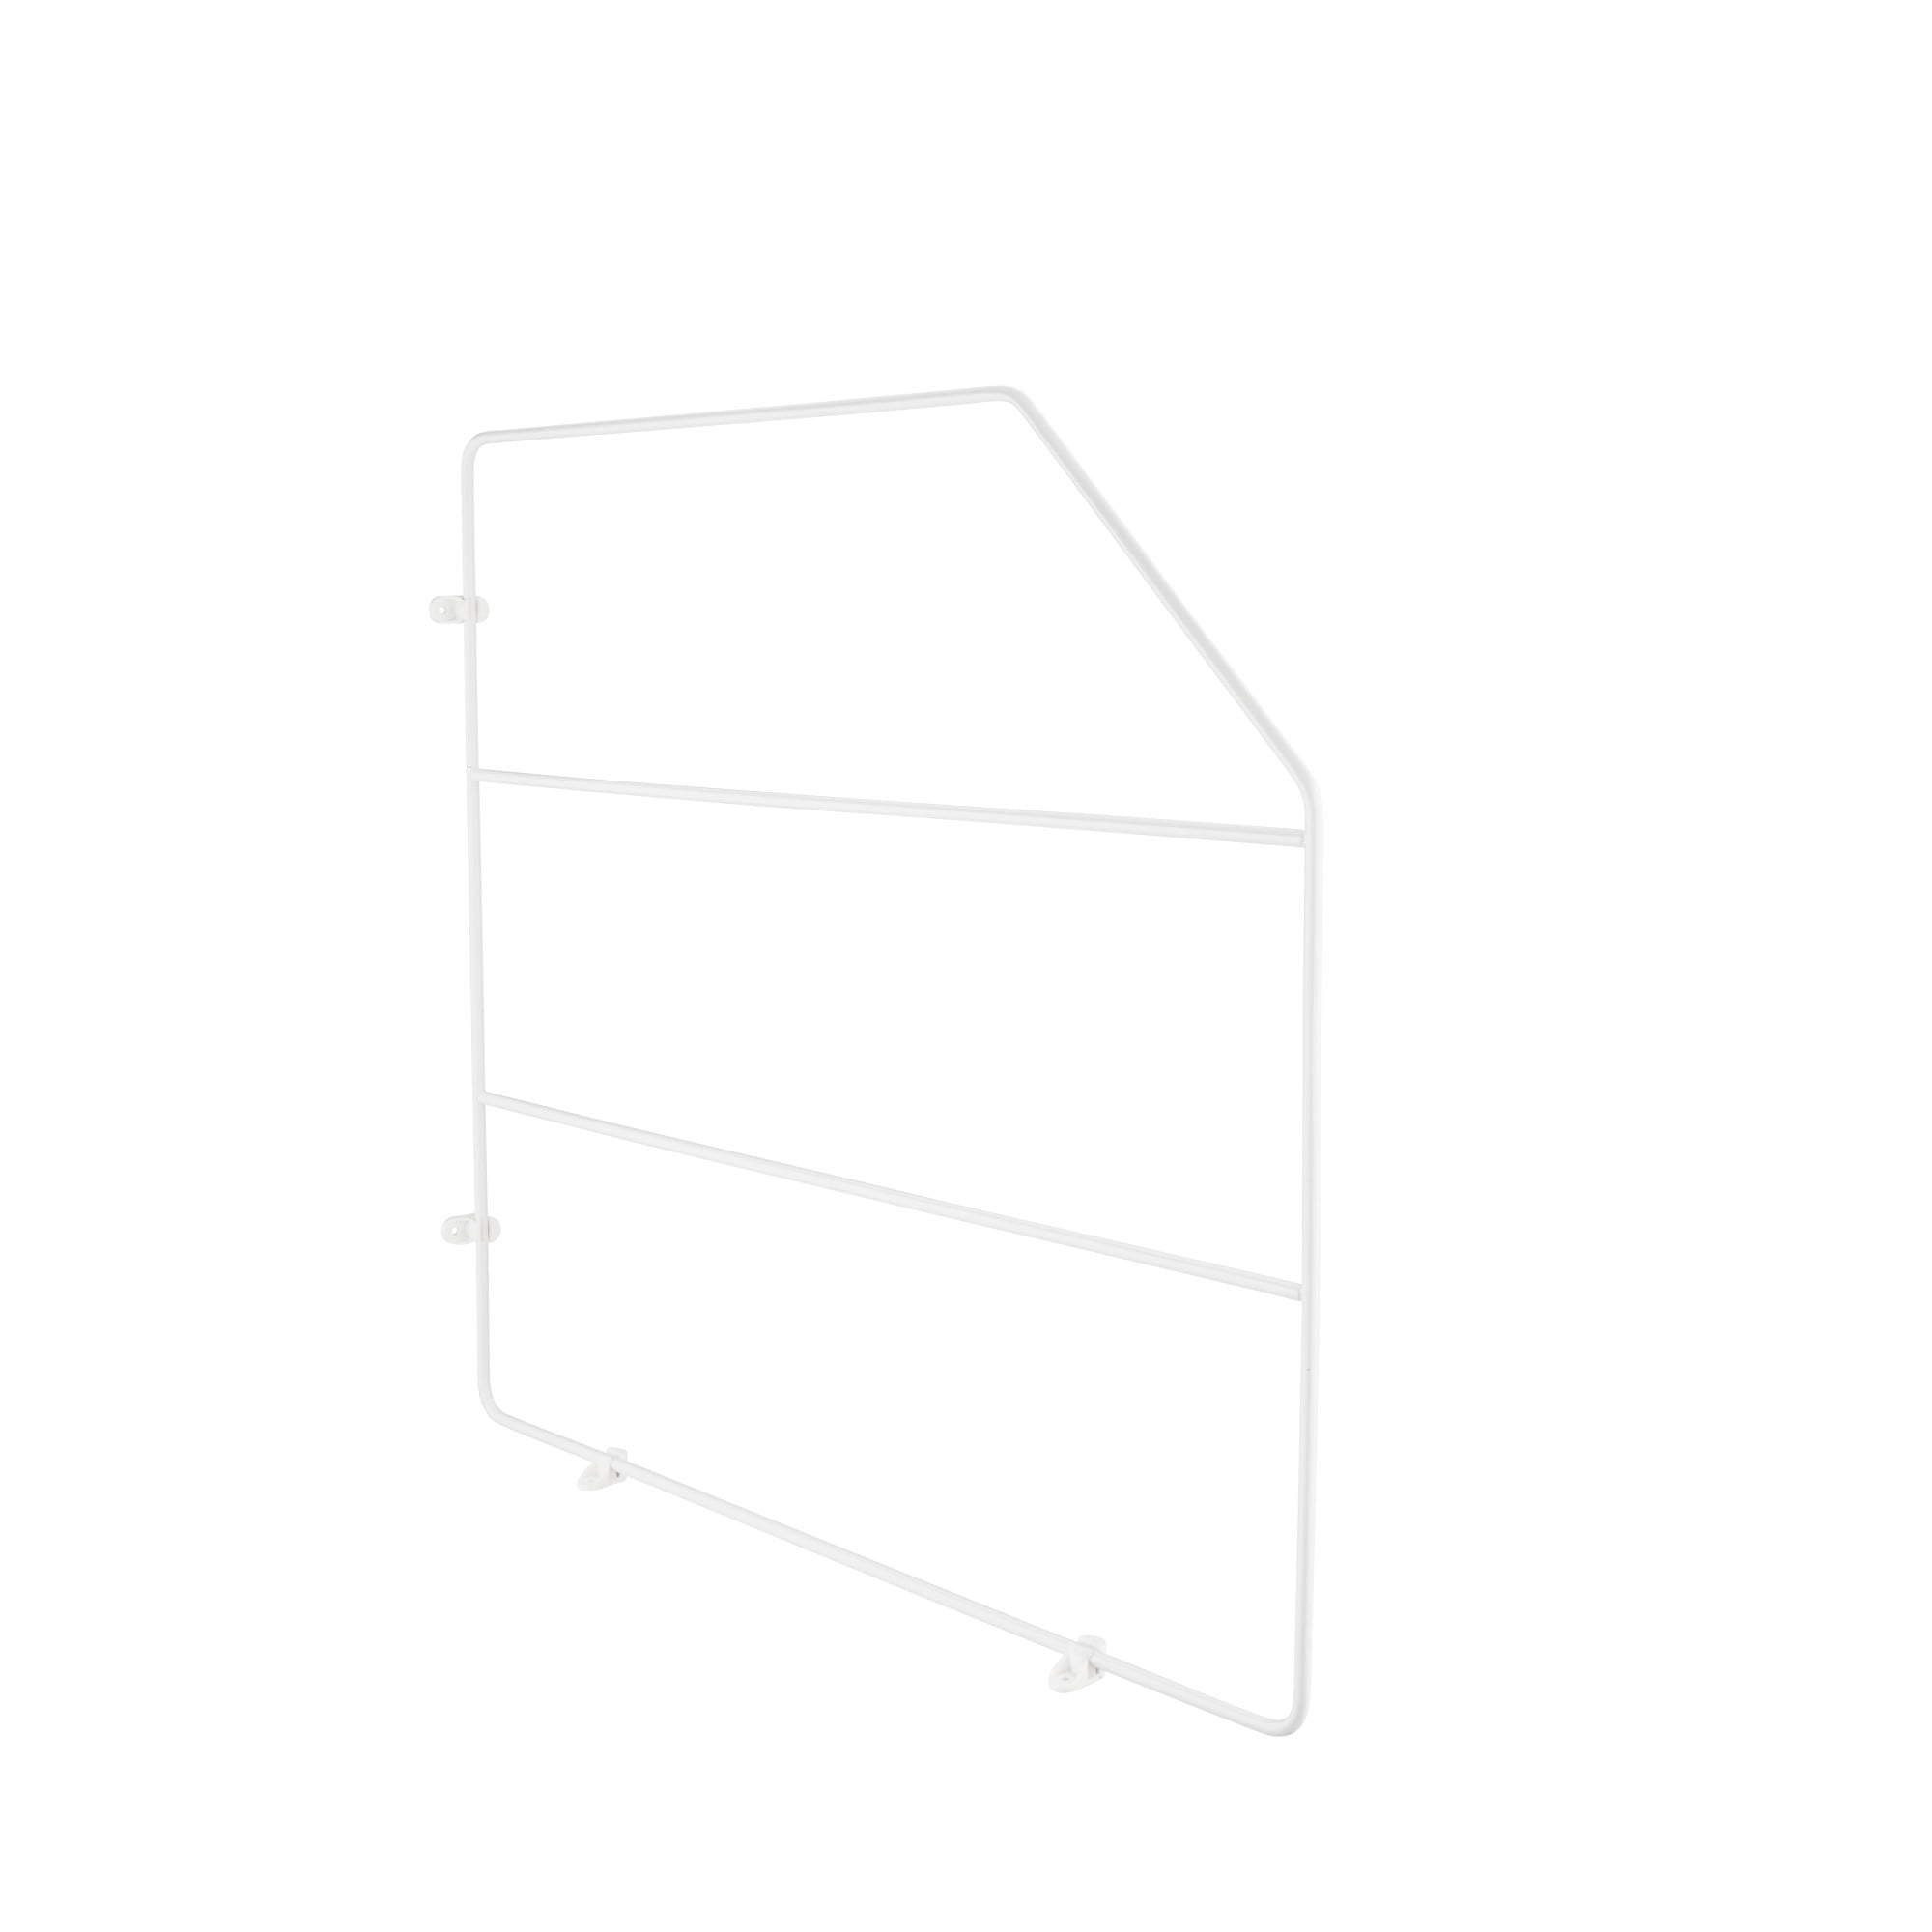 Rev-A-Shelf 597-18CR-52 18 inch Chrome Bakeware Sheet Tray Divider Kitchen Organizer